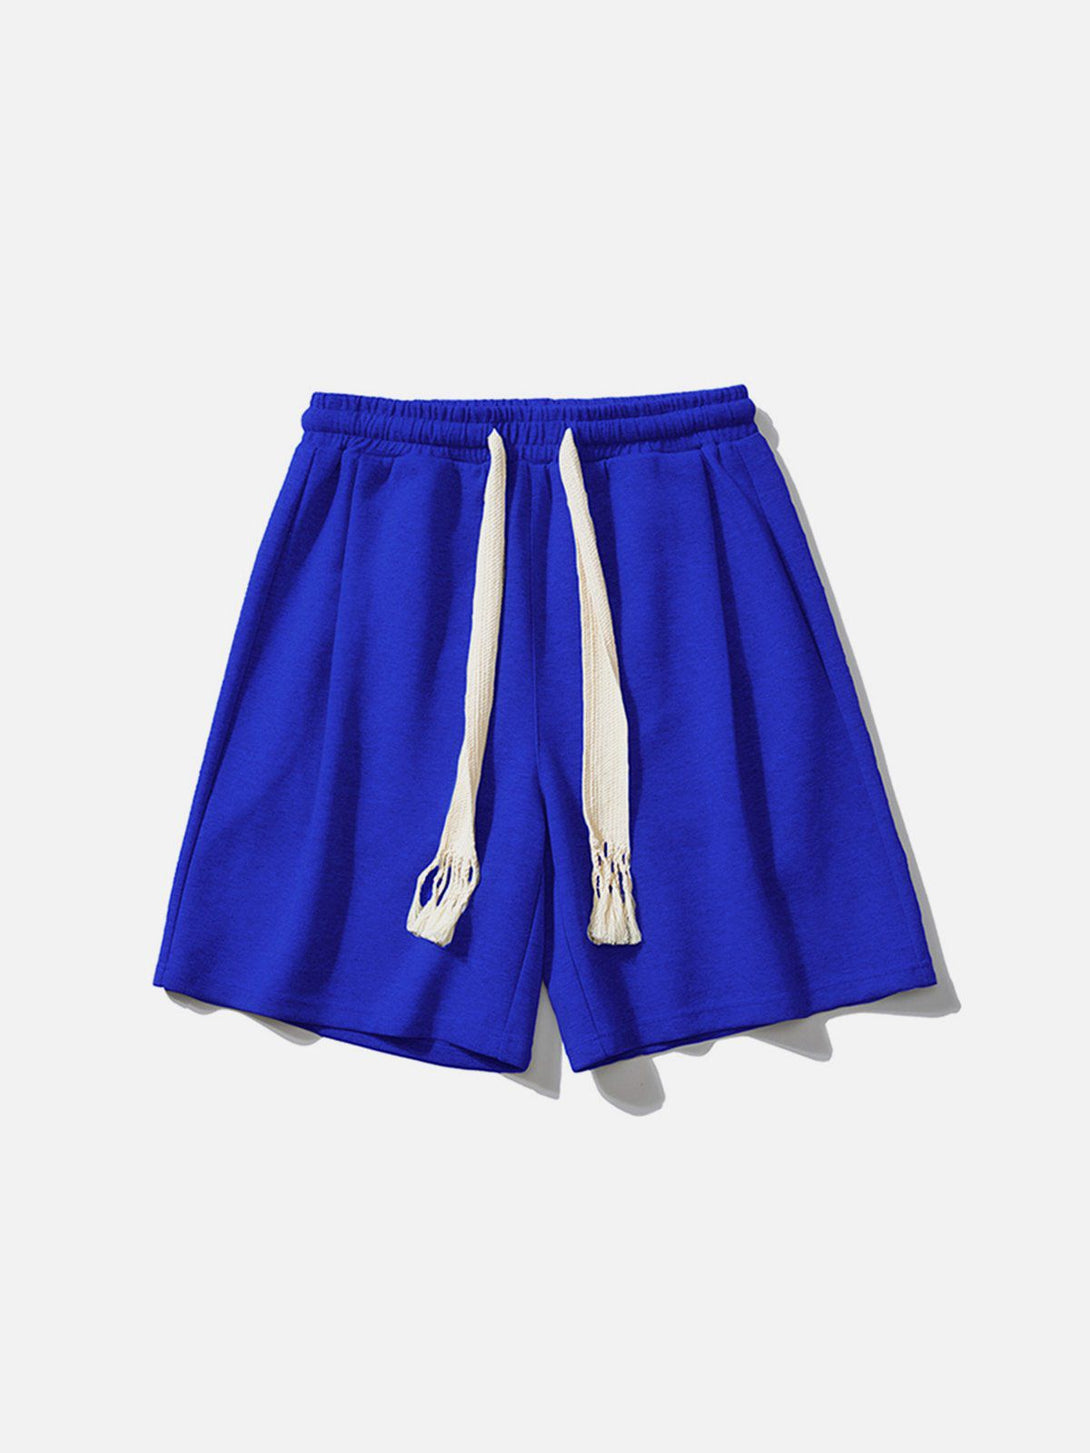 Majesda® - Solid Drawstring Shorts outfit ideas streetwear fashion